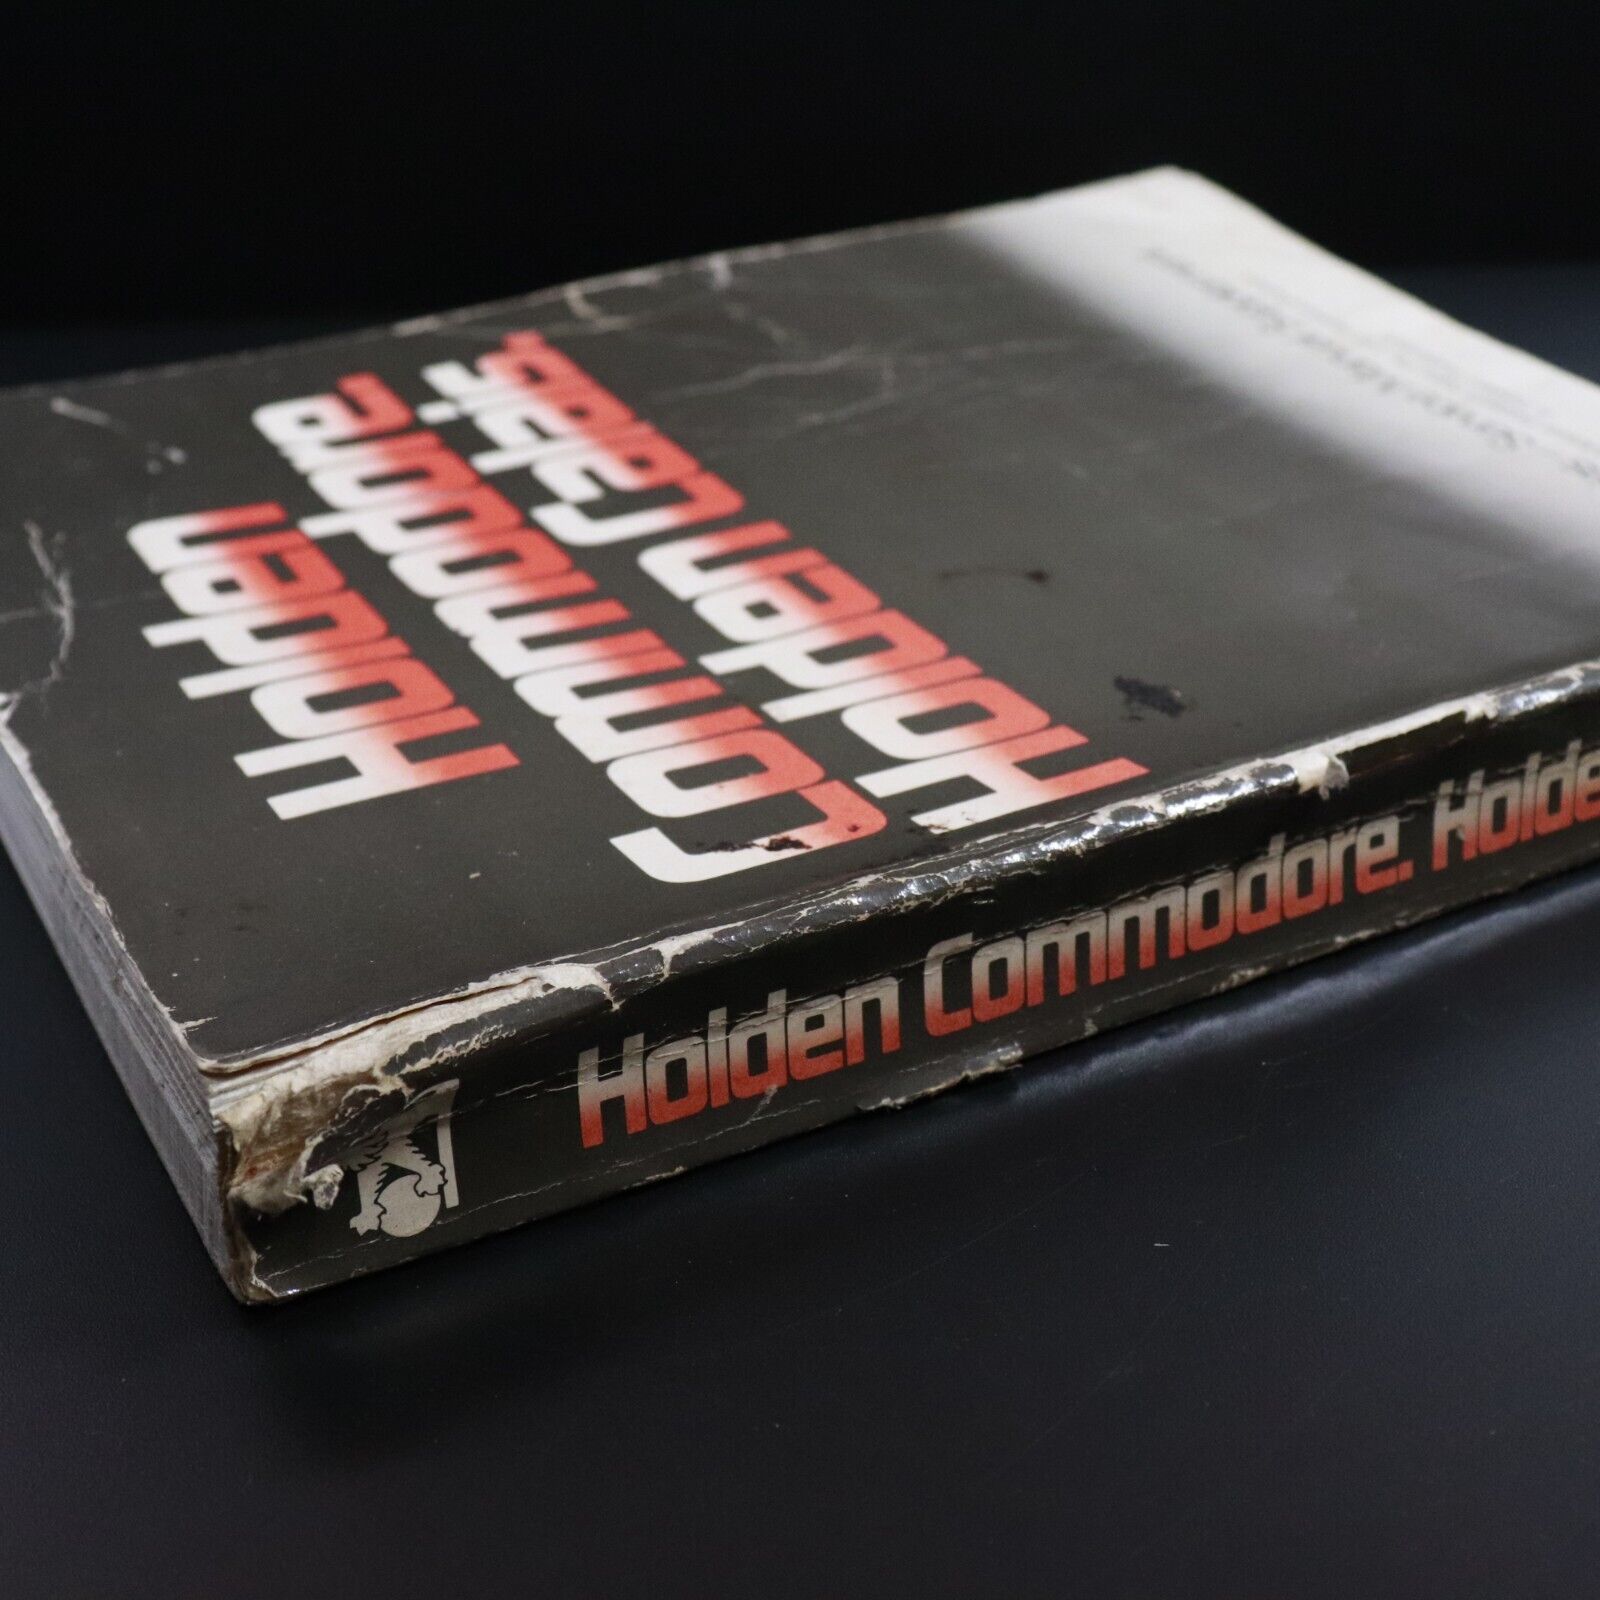 1984 Holden Commodore Holden Calais VK Series Service Manual Supplement Book